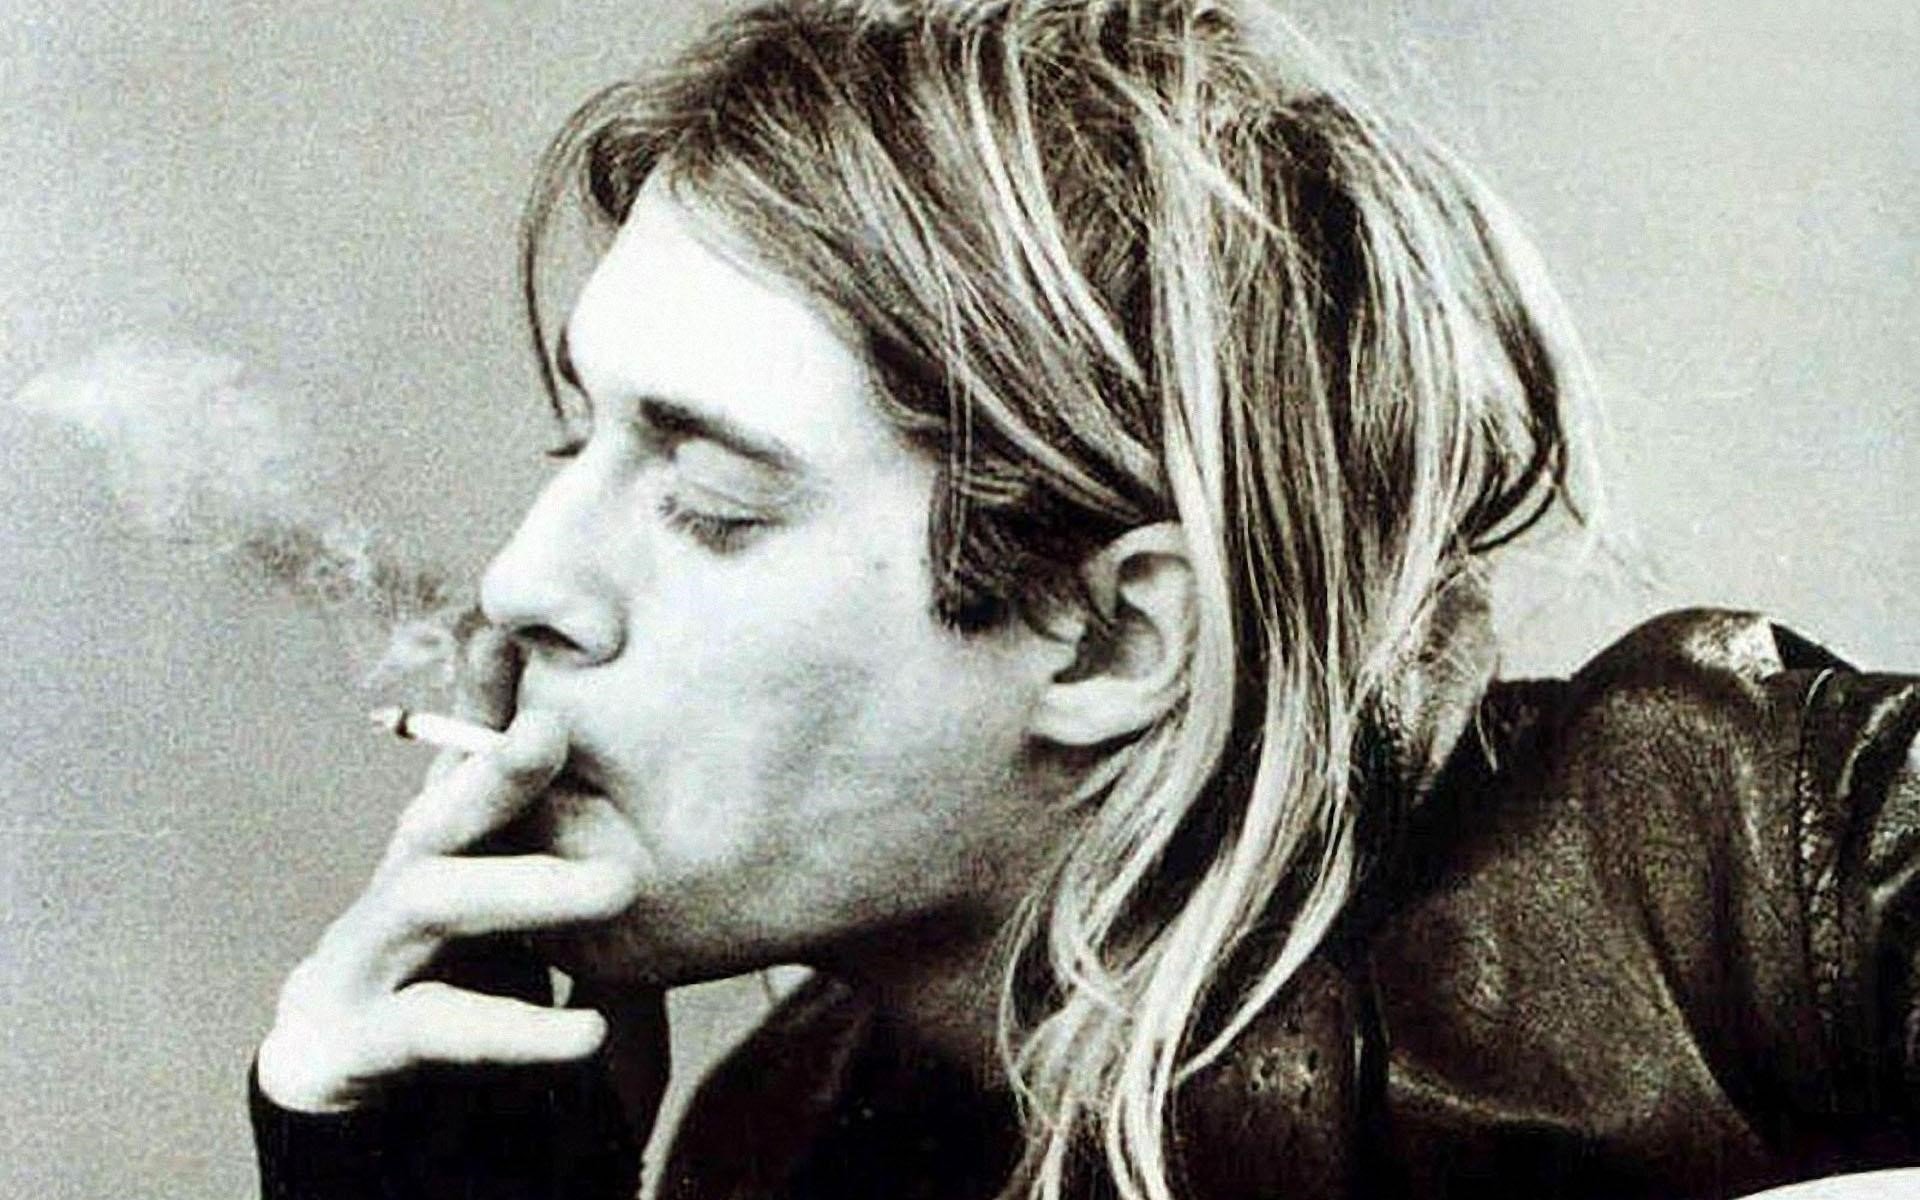 HD wallpaper: Nirvana, Kurt Cobain, Dave Grohl, Krist Novoselic, grunge,  band | Wallpaper Flare